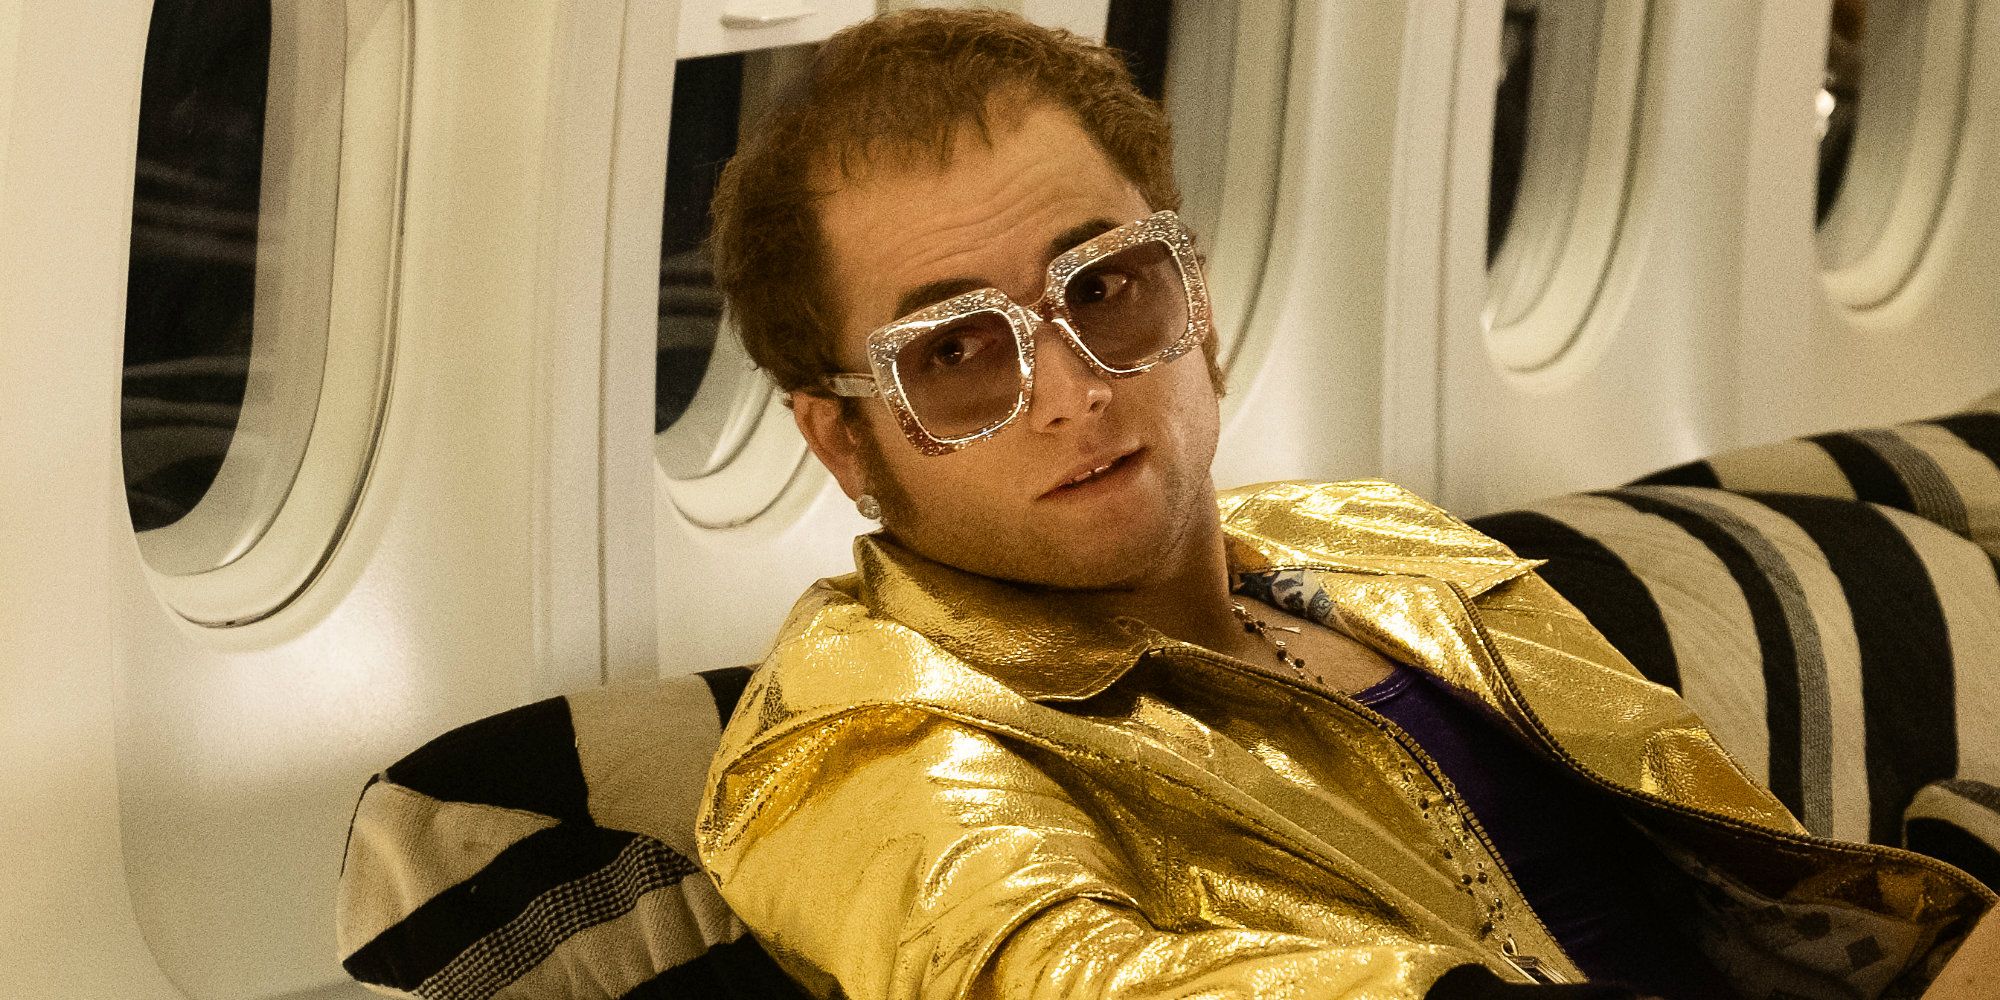 Elton John (Taron Egerton) in his private jet in Rocketman.